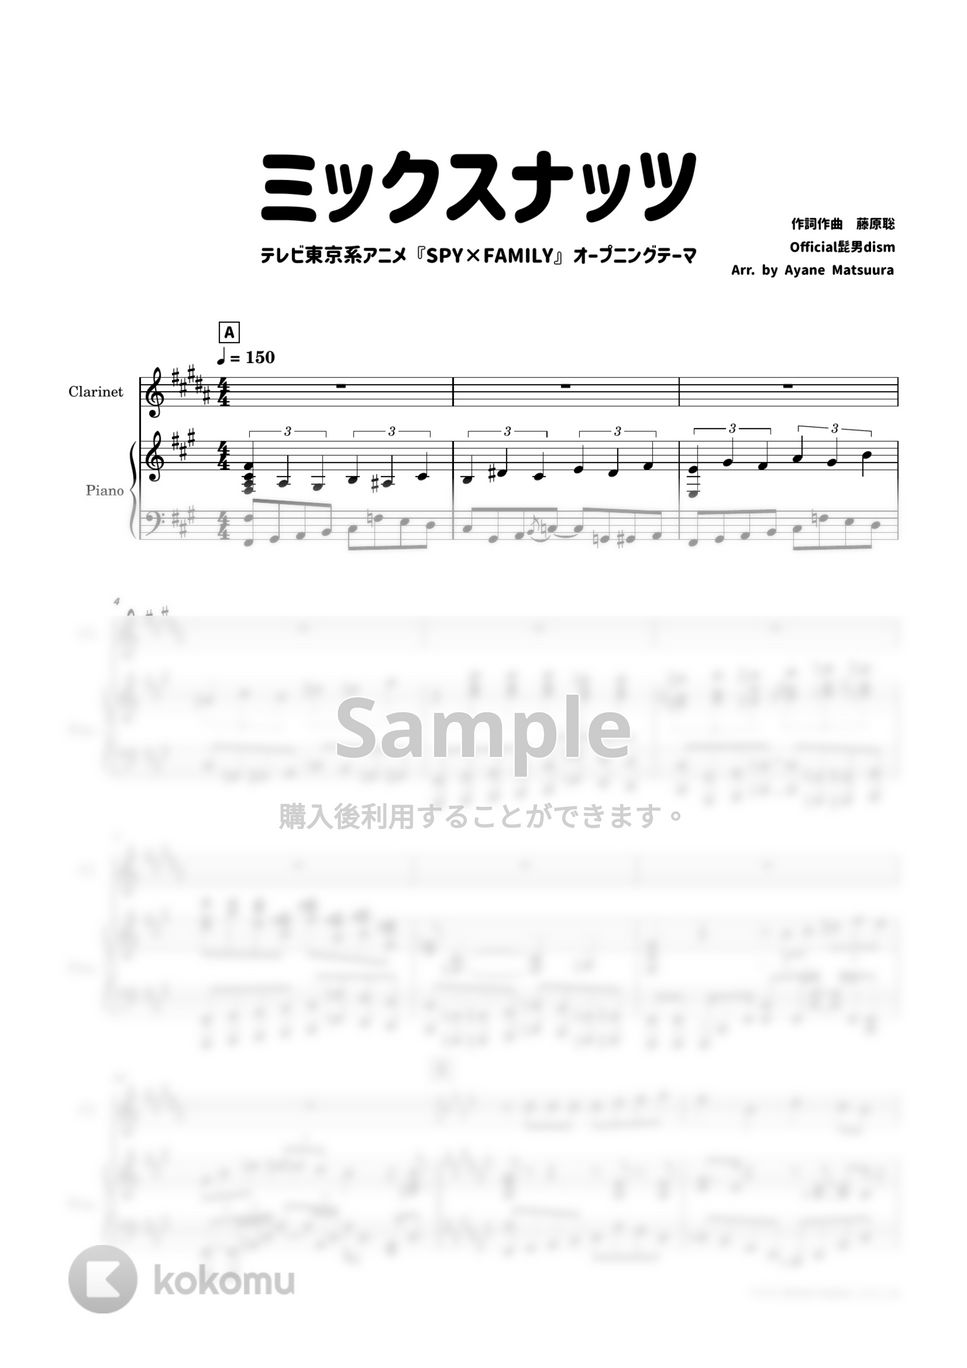 Official髭男dism - 【クラリネット＆ピアノ】原調ミックスナッツ（Official髭男dism） by 管楽器の楽譜★ふるすこあ